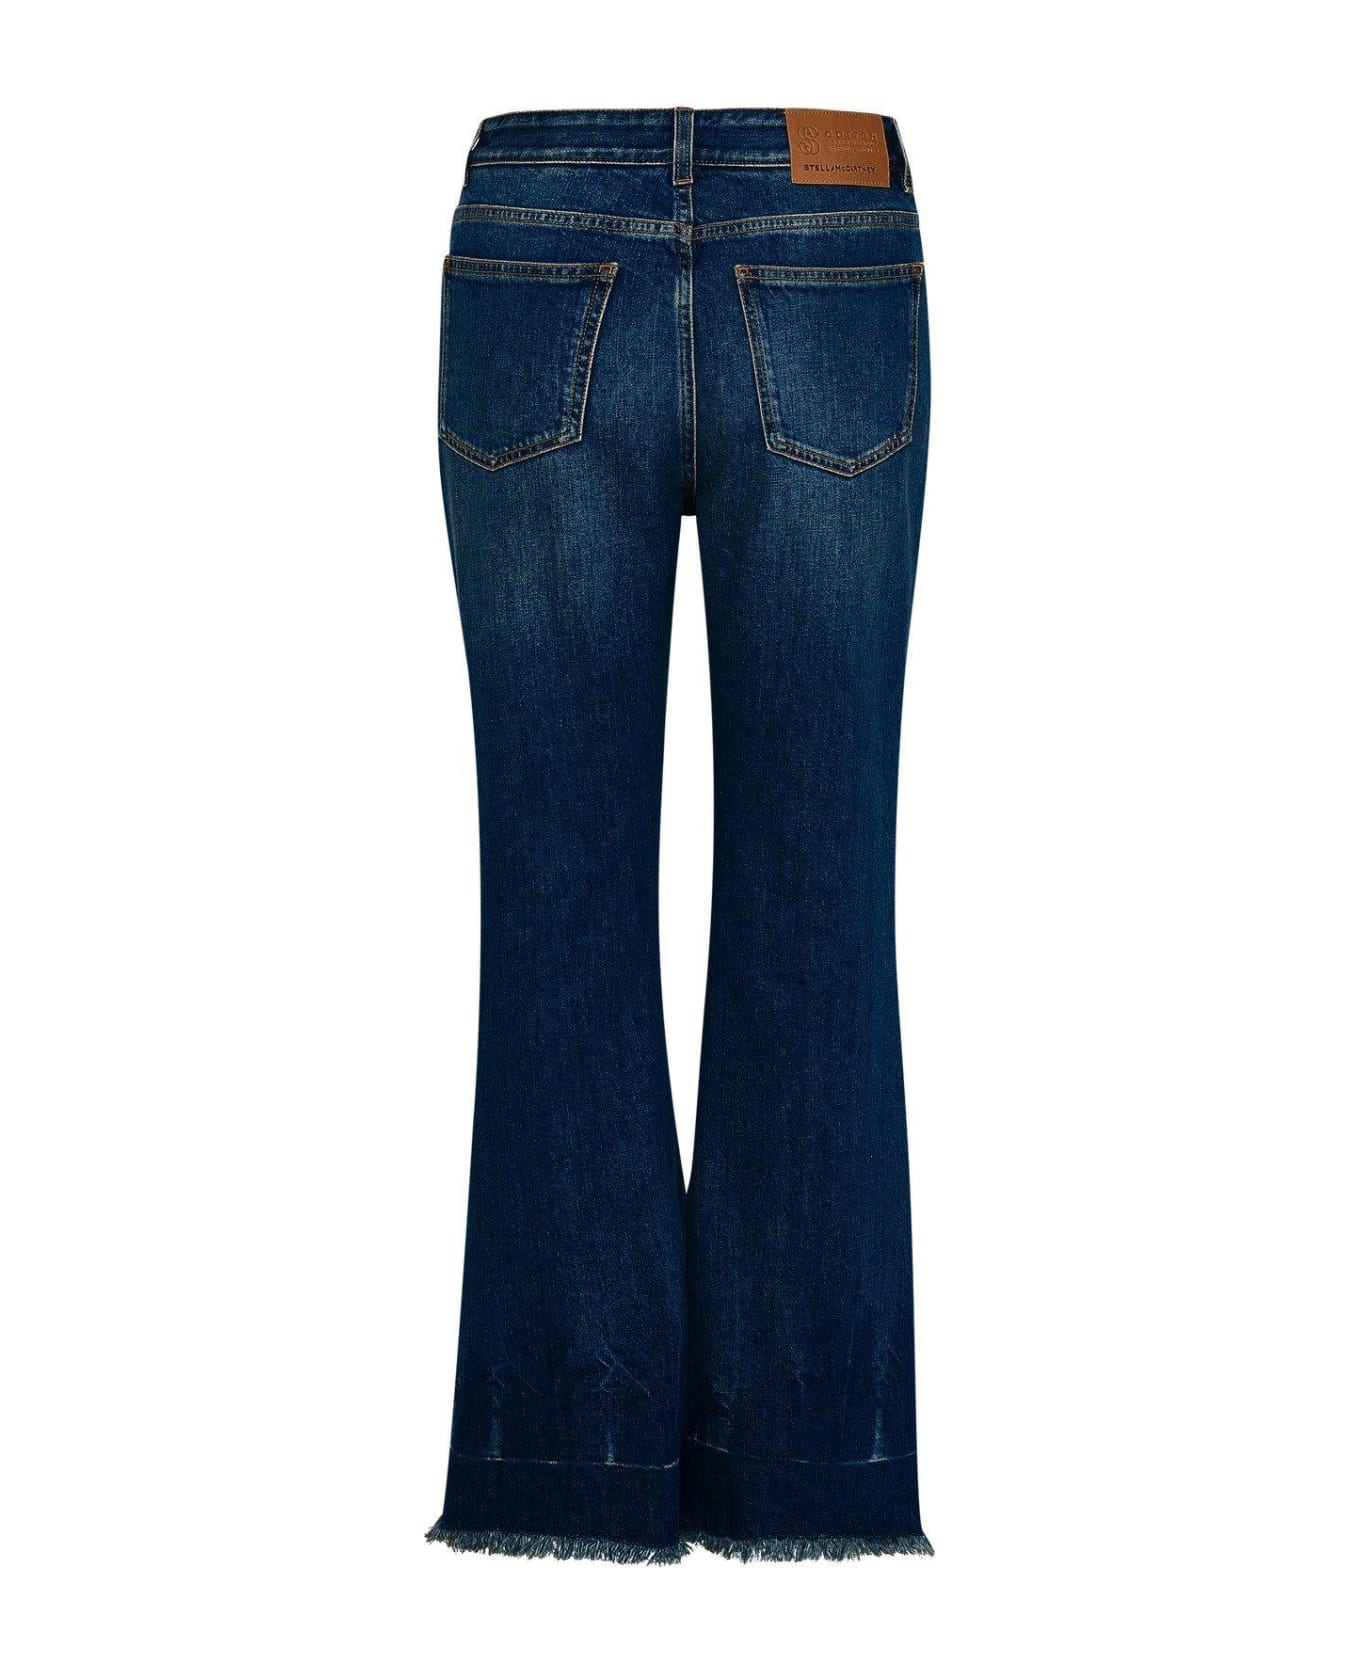 Stella McCartney Cropped Flared Jeans - Blu scuro デニム